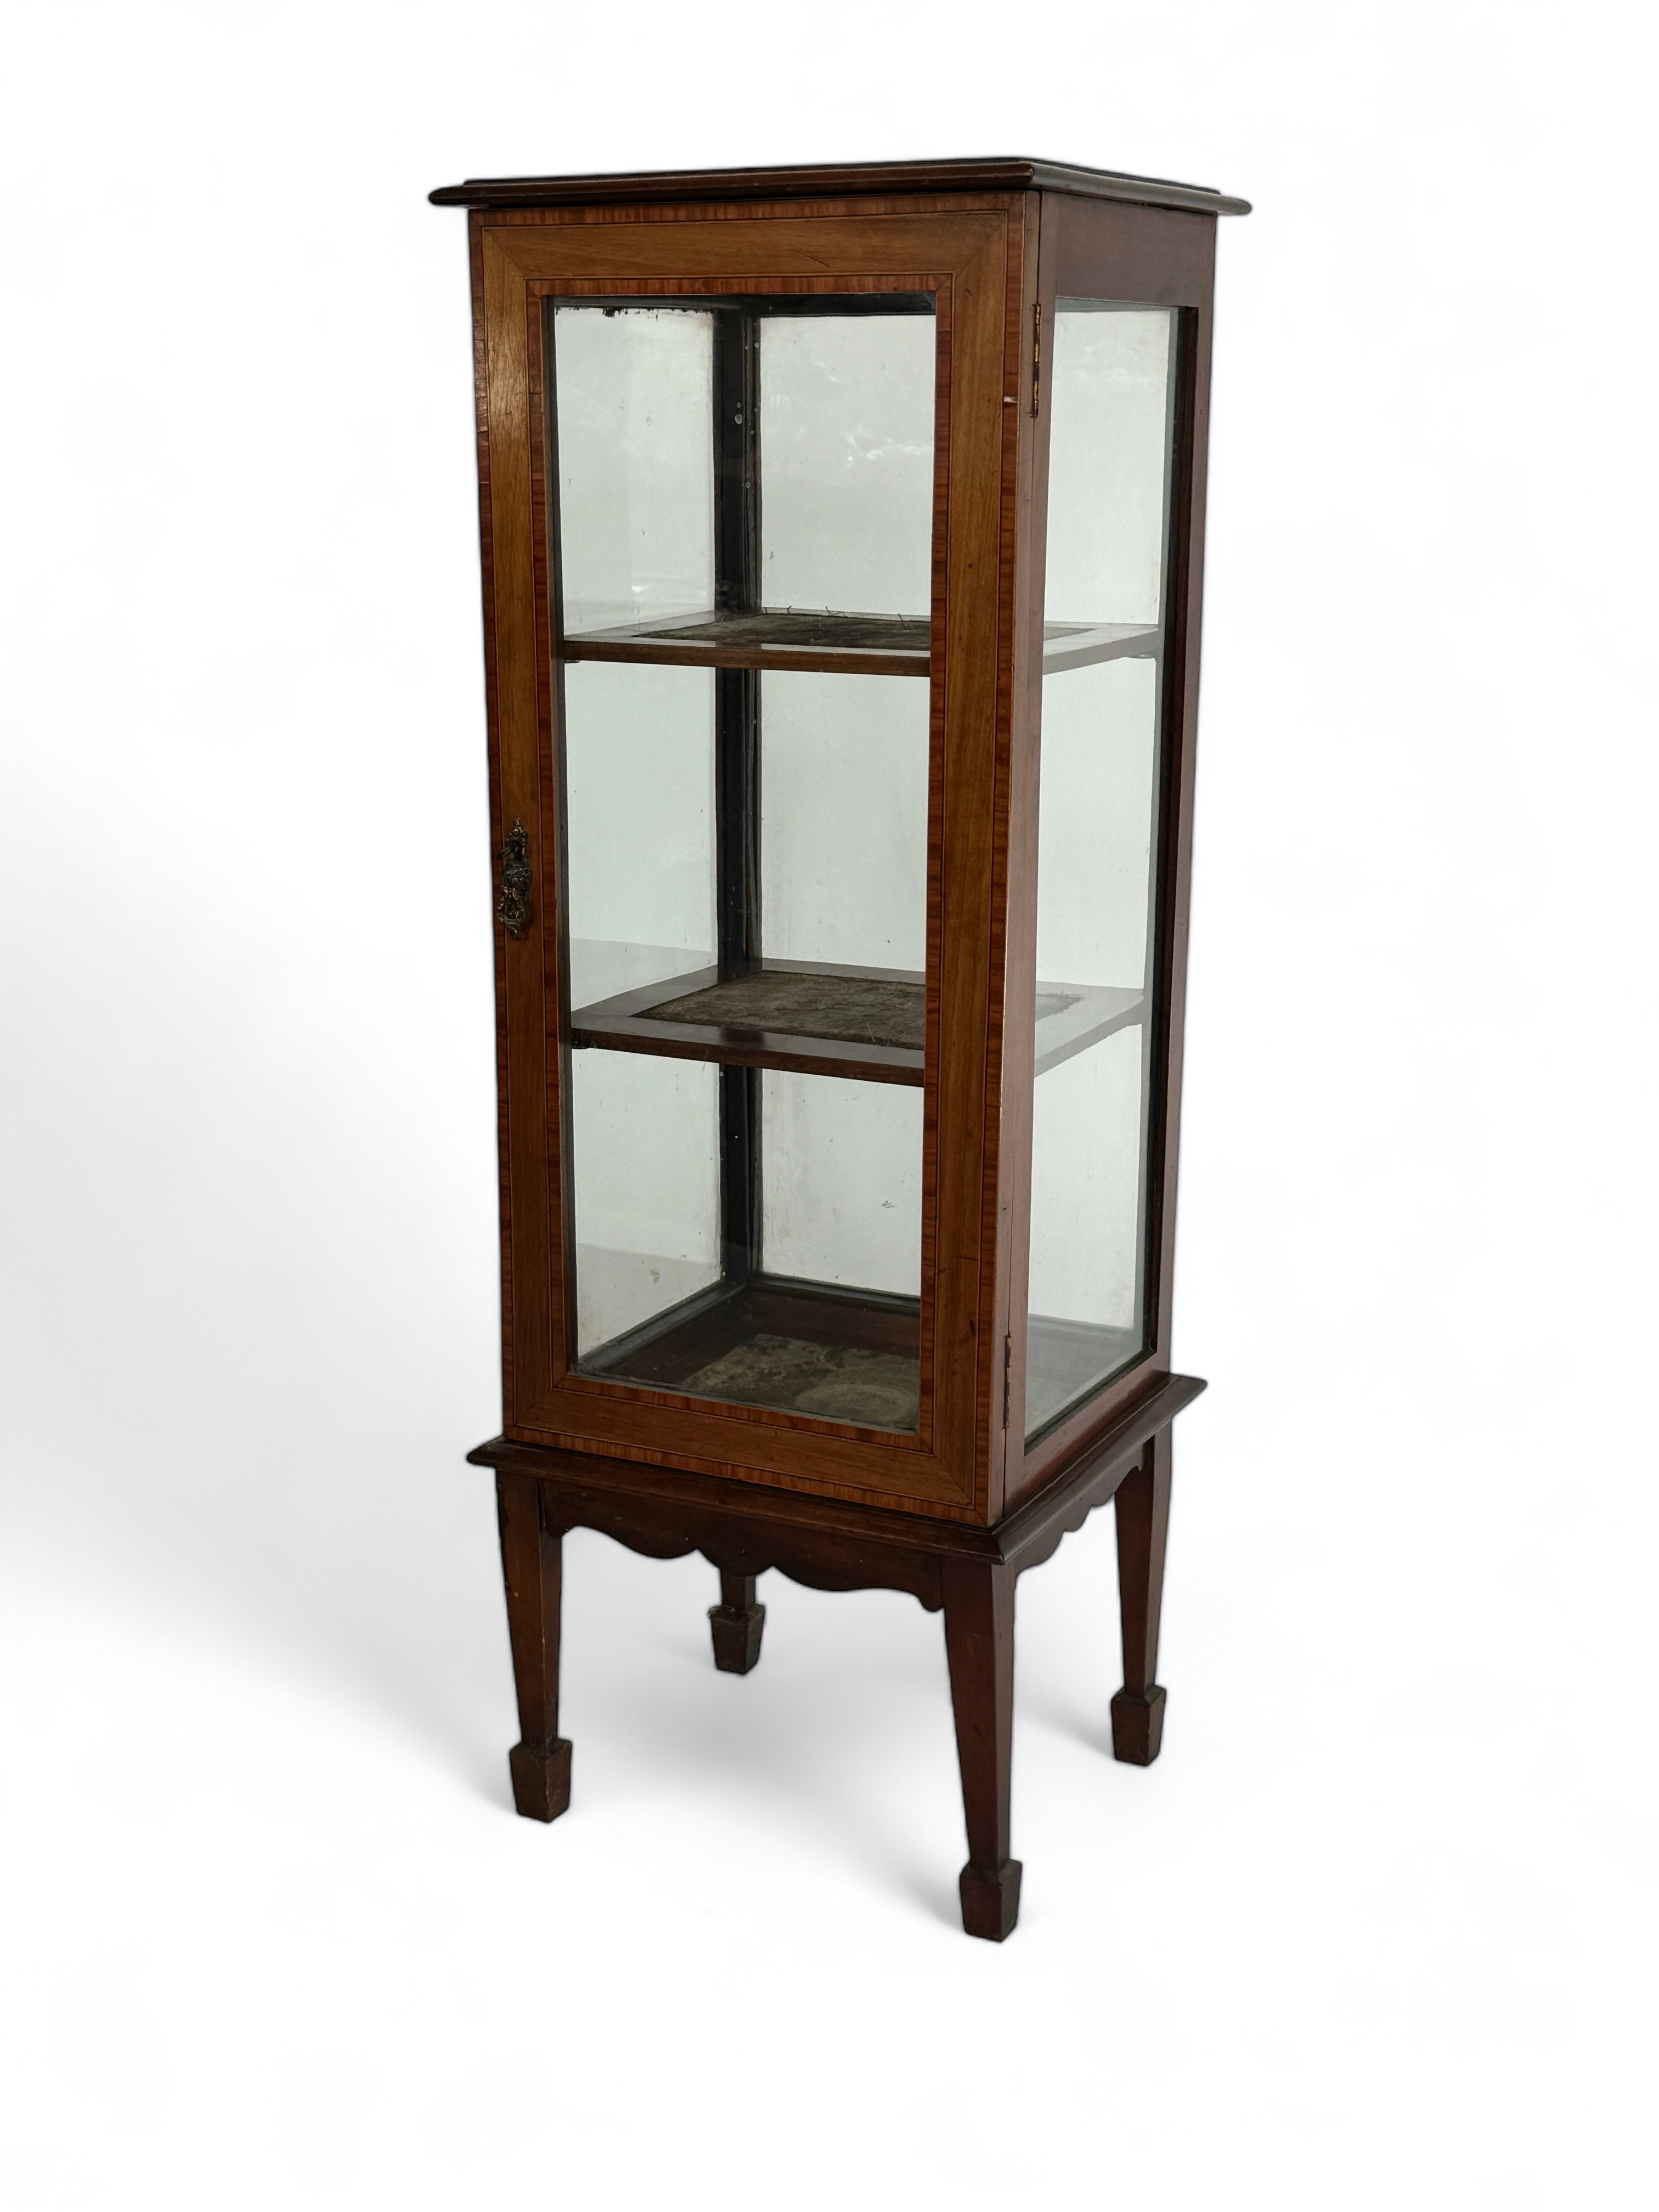 A small Edwardian mahogany and satinwood banded freestanding display cabinet / vitrine